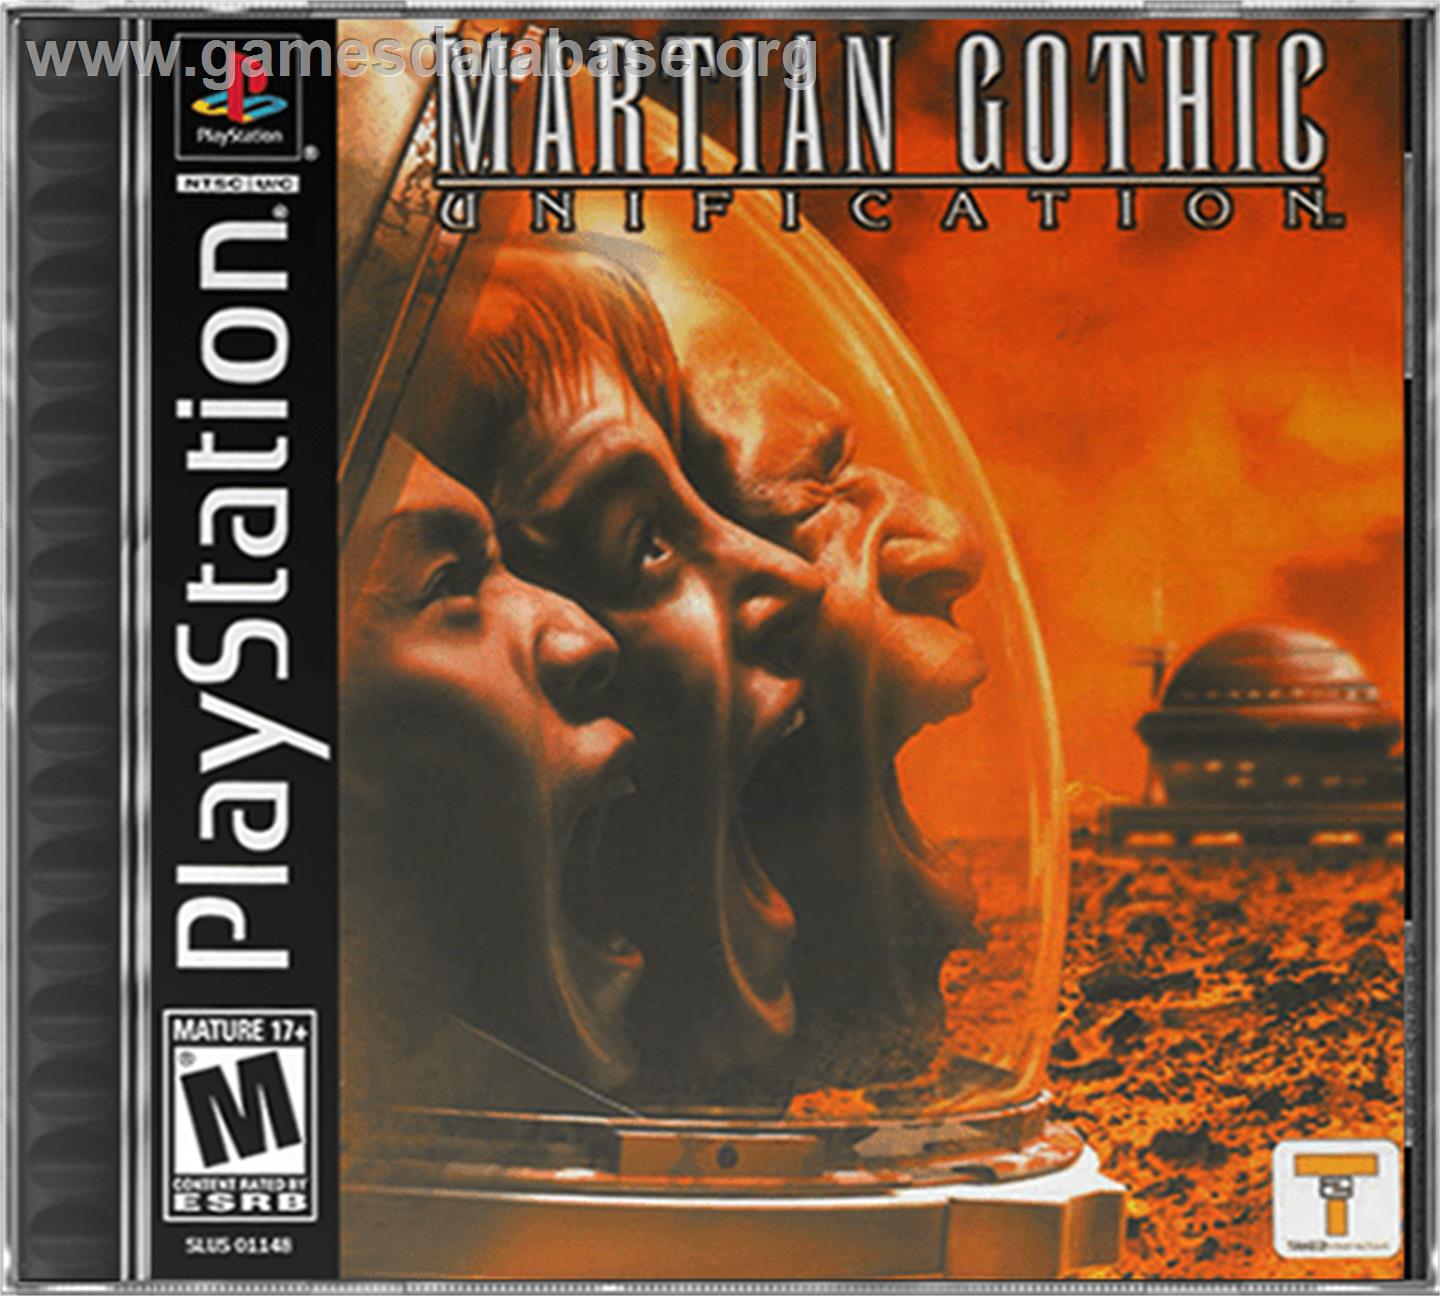 Martian Gothic: Unification - Sony Playstation - Artwork - Box